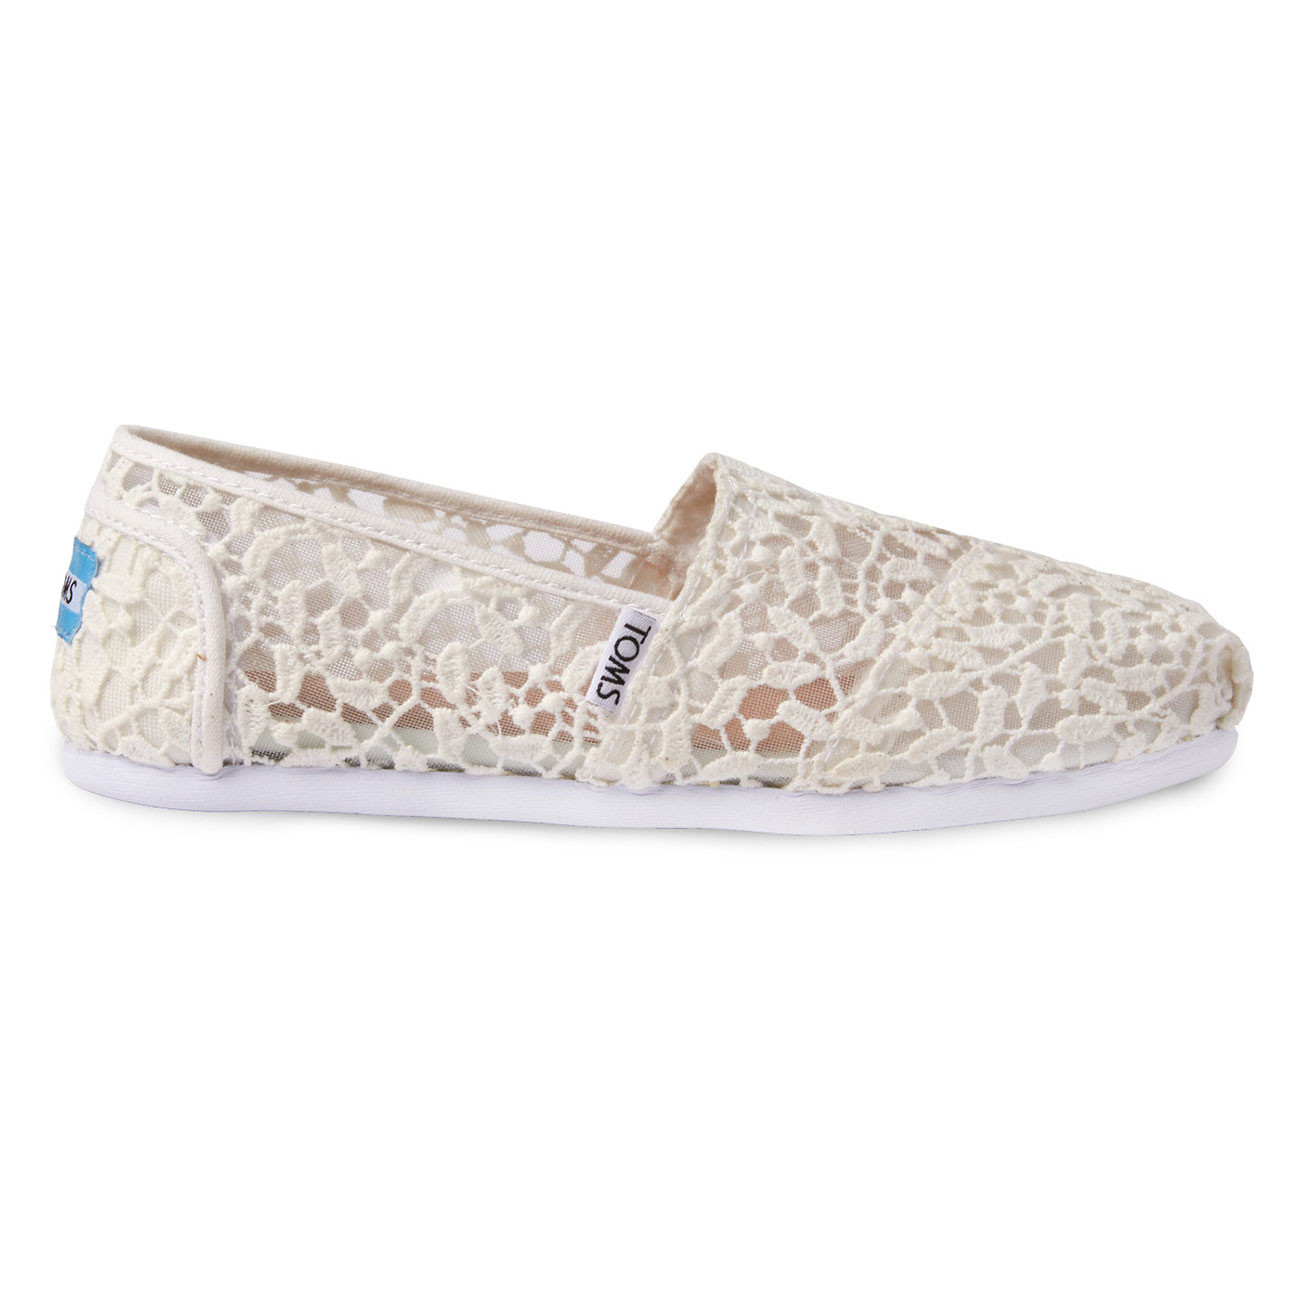 Sneakers Toms Alpargata white lace 